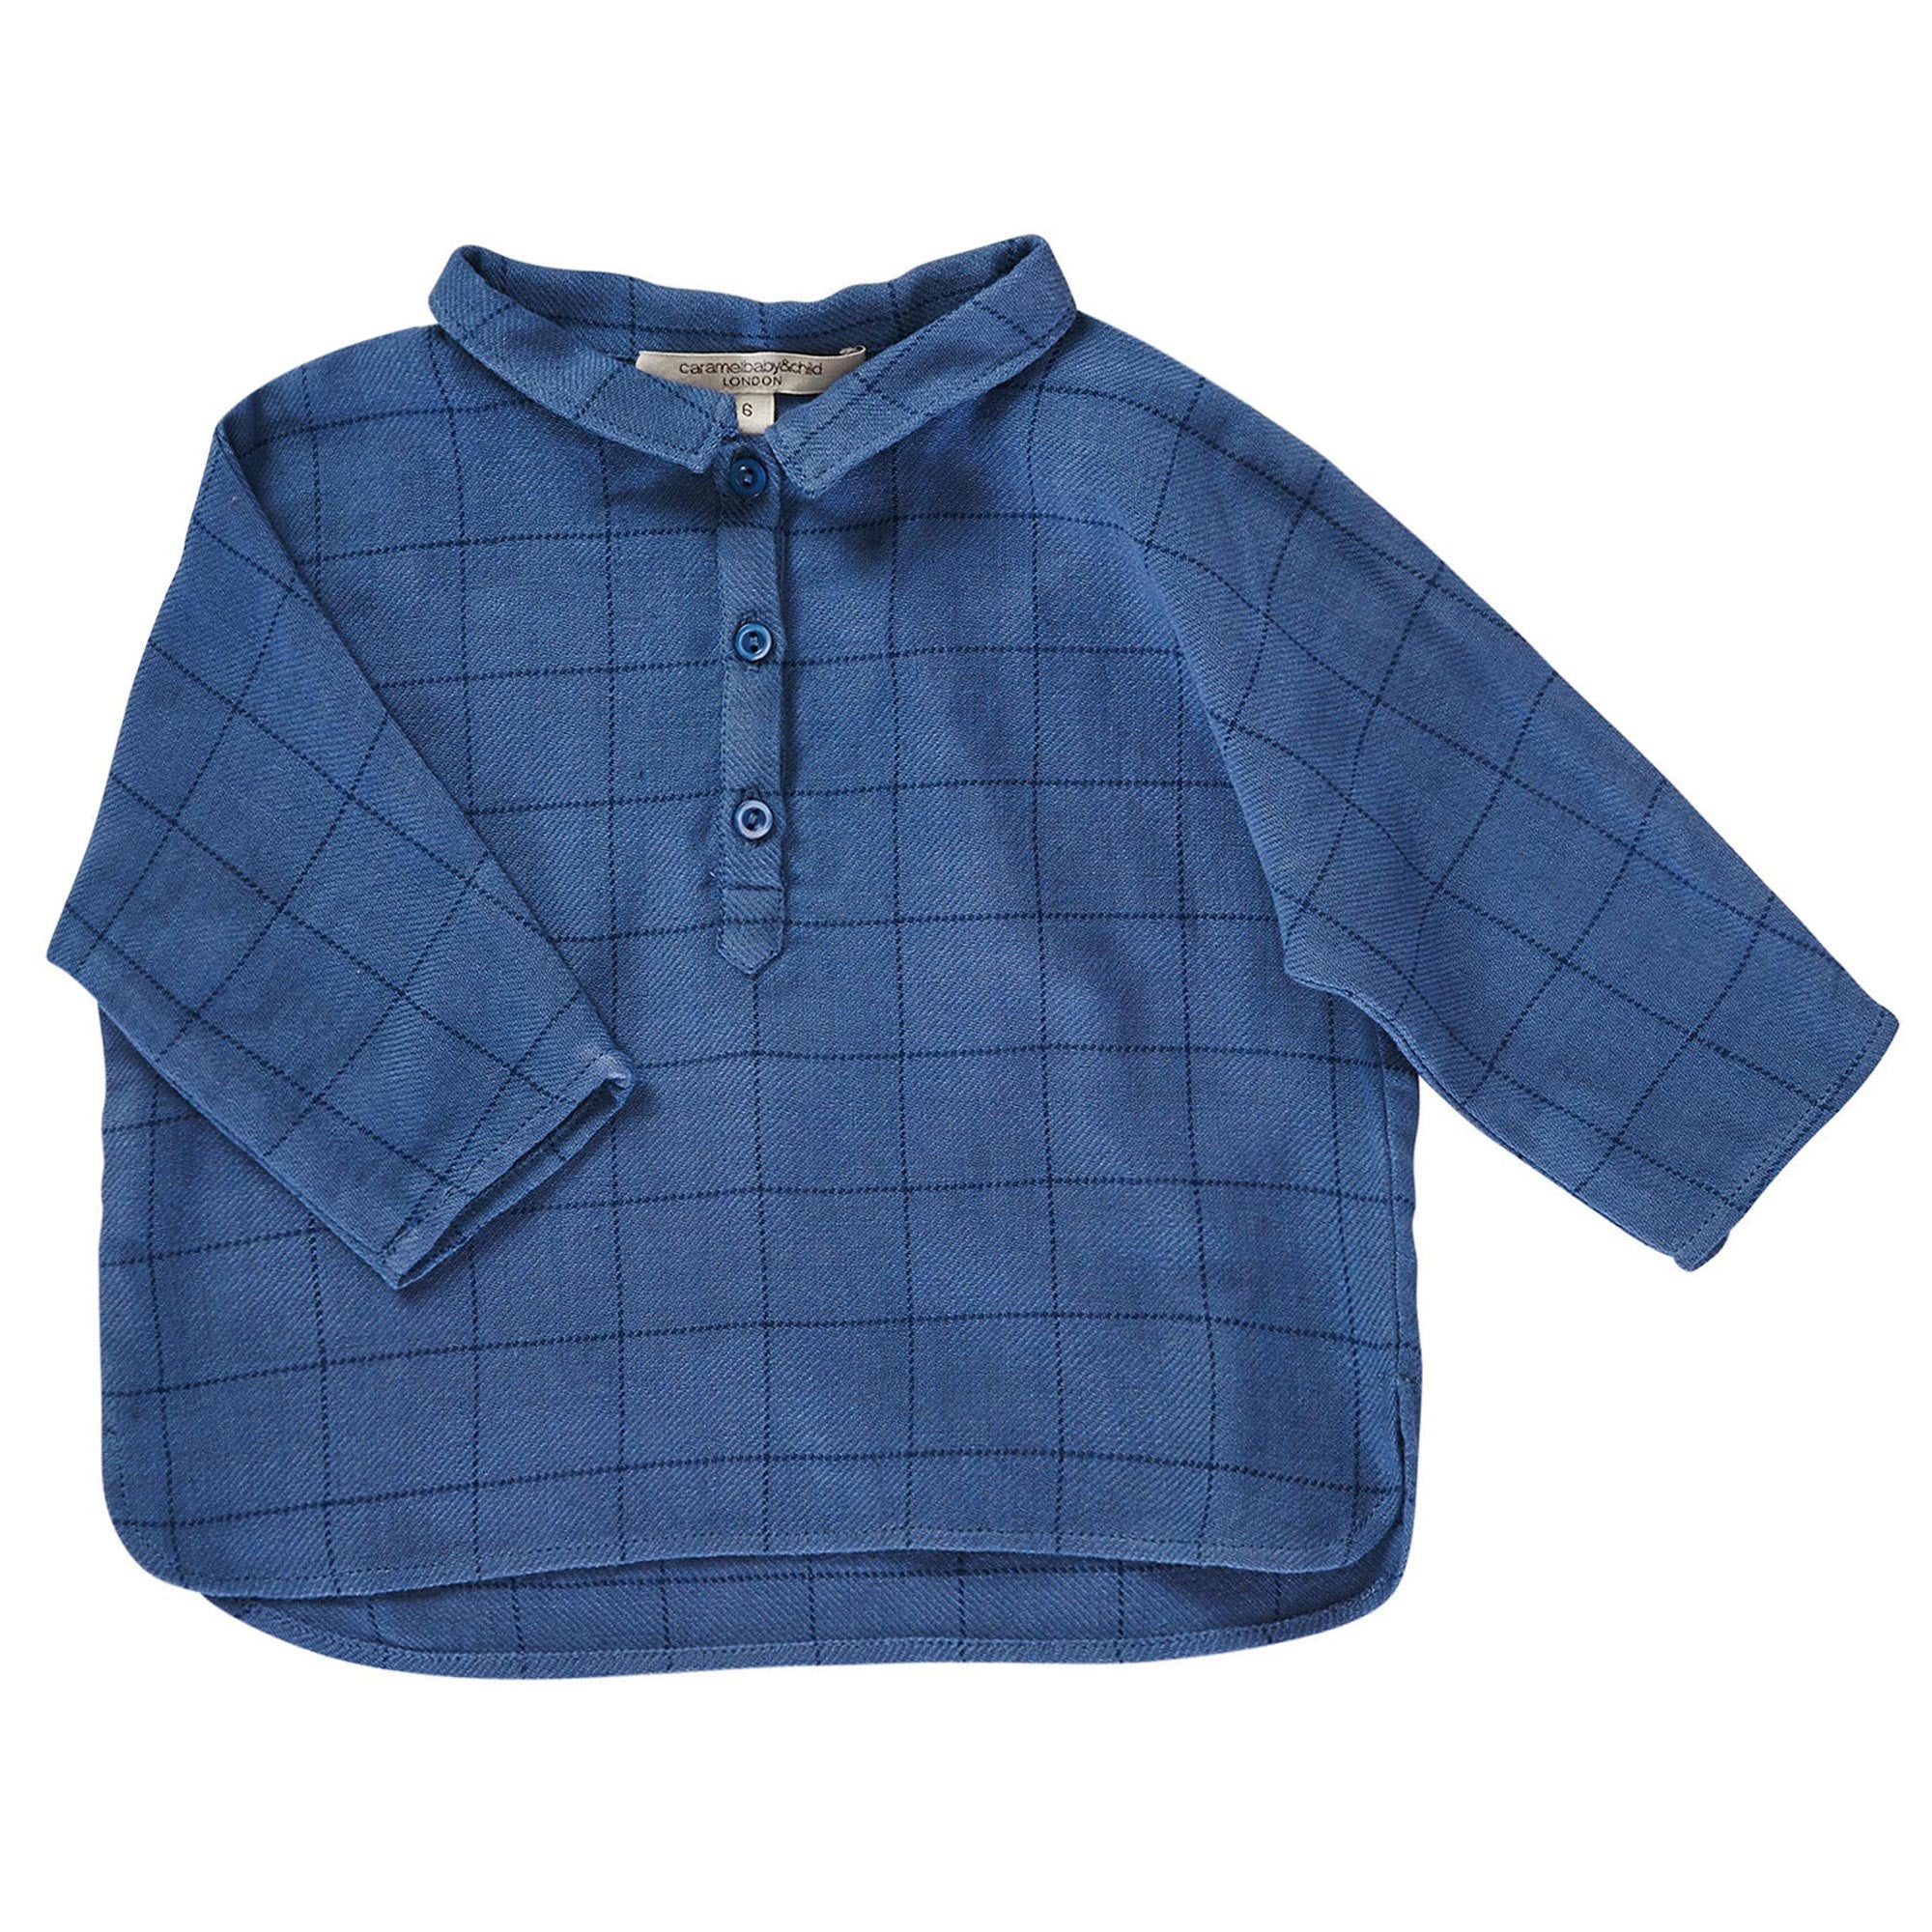 Baby Boys Blue Check Cotton Shirt - CÉMAROSE | Children's Fashion Store - 1